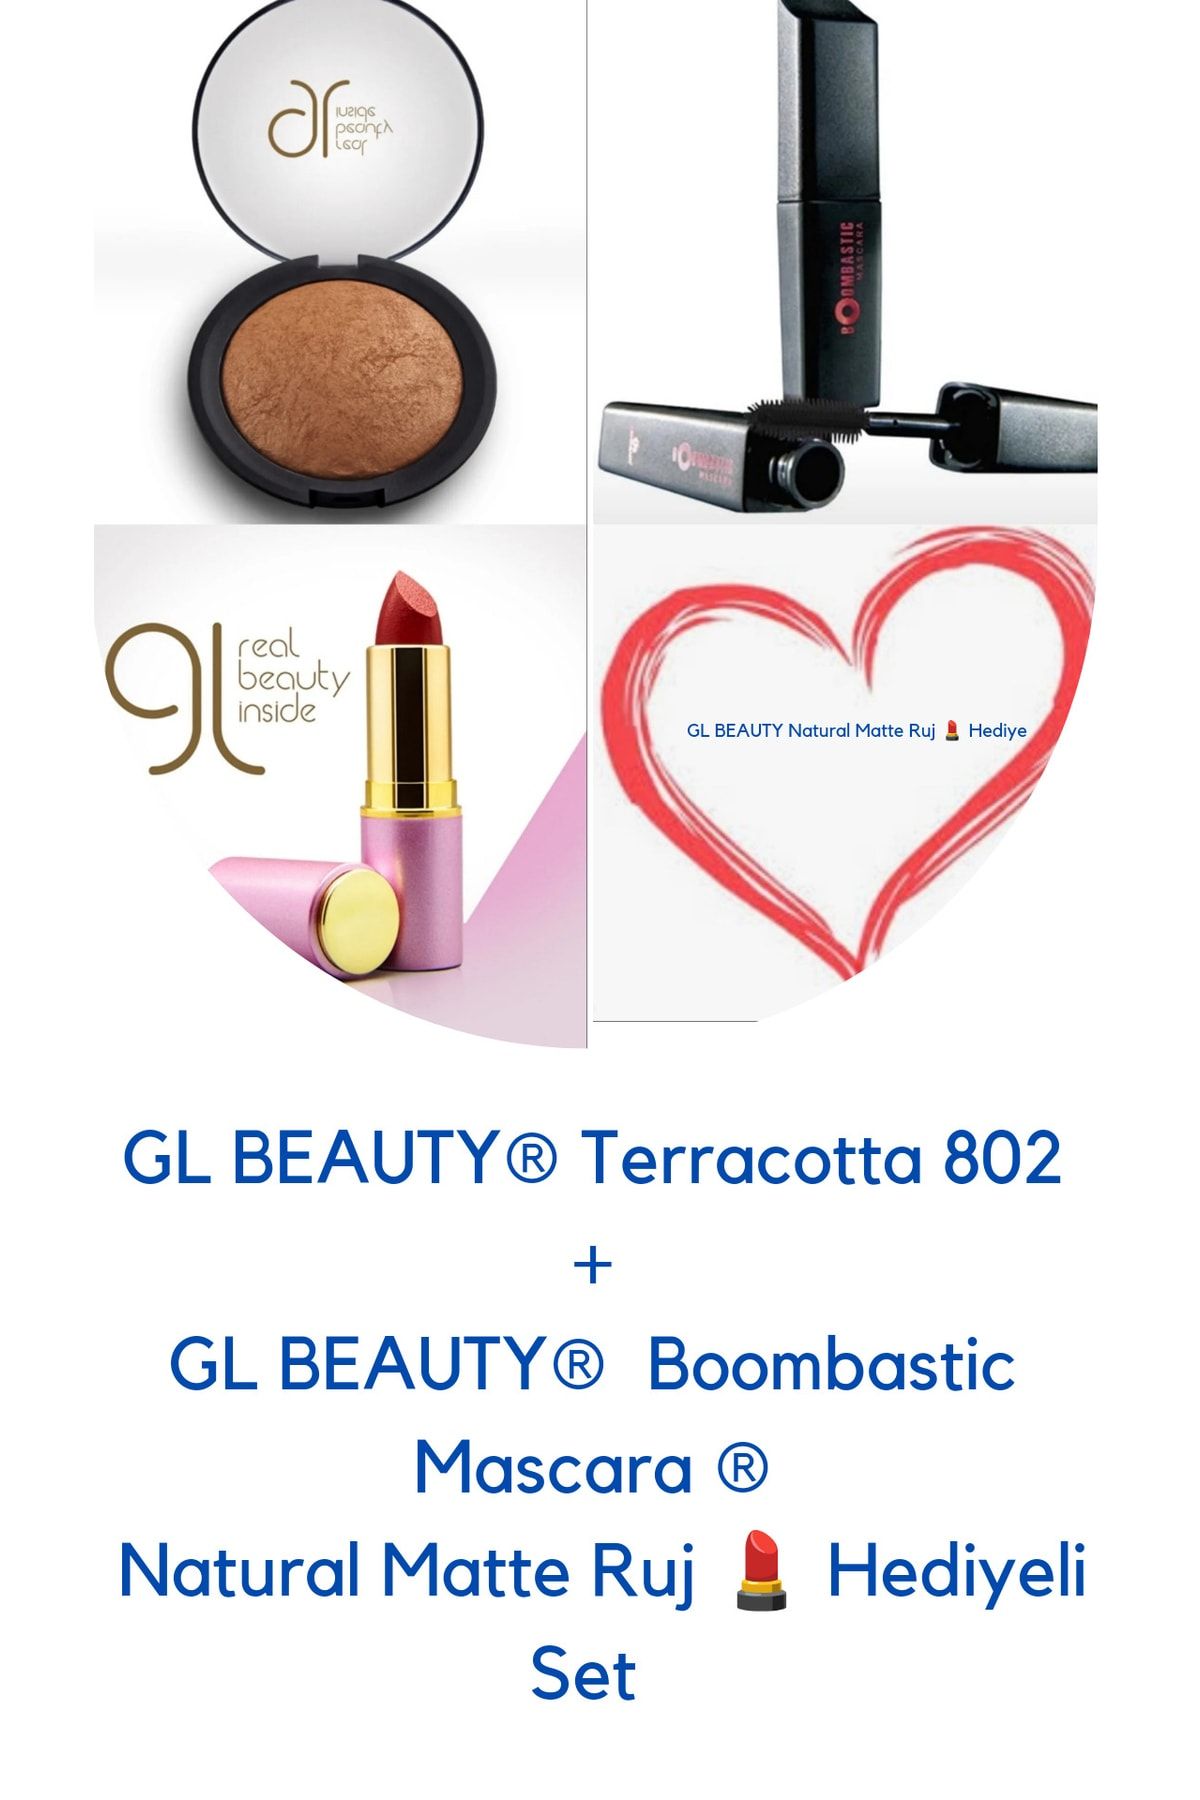 GL Beauty Ruj Hediyeli Terracotta 802 + Boombactic Mascara Makyaj Seti